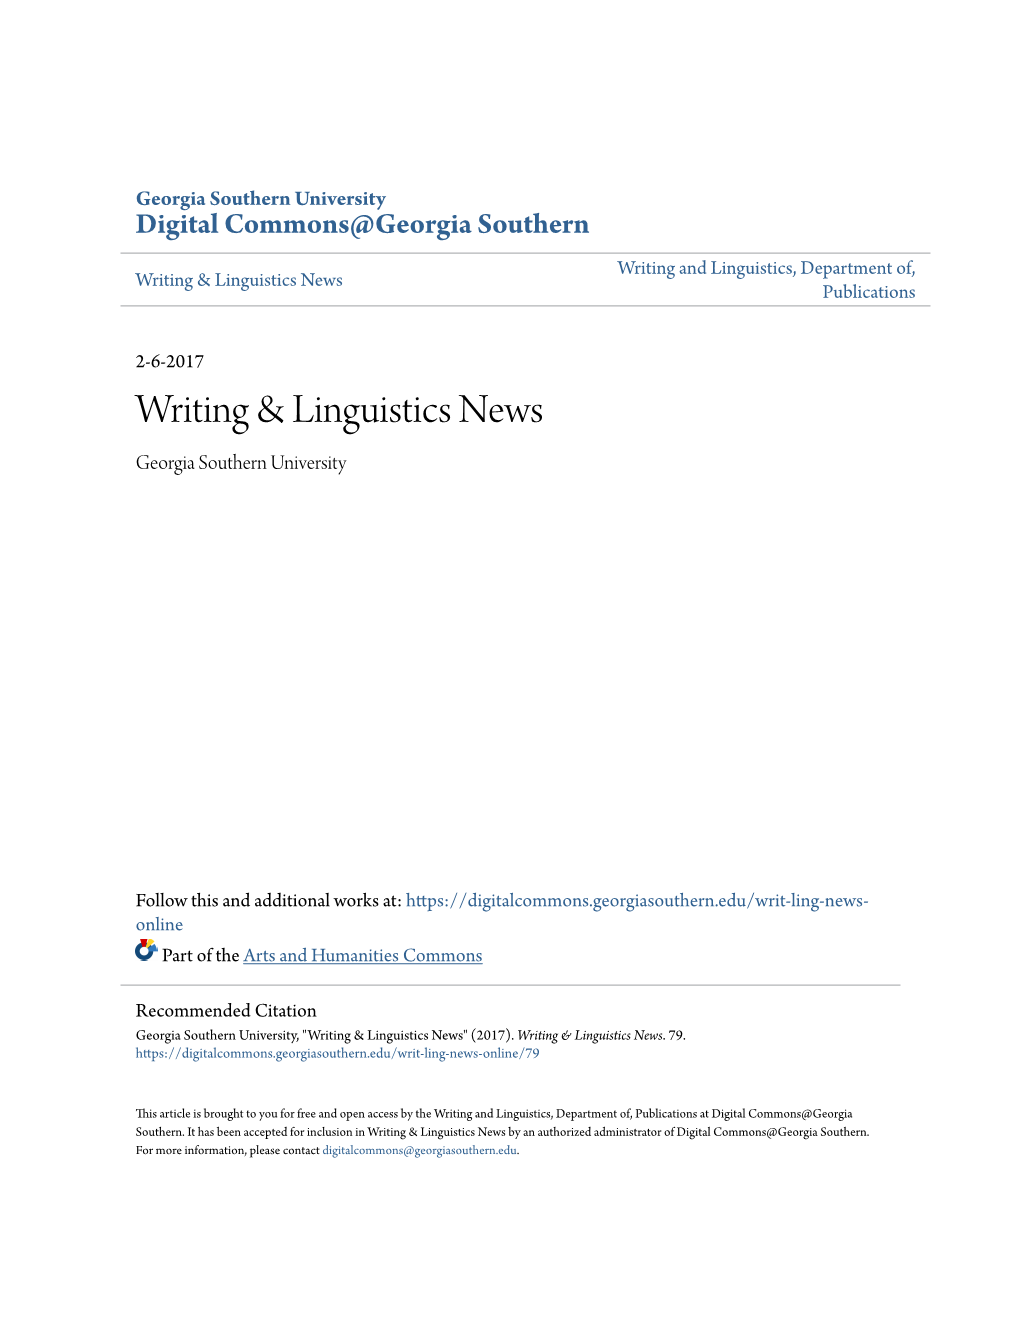 Writing & Linguistics News